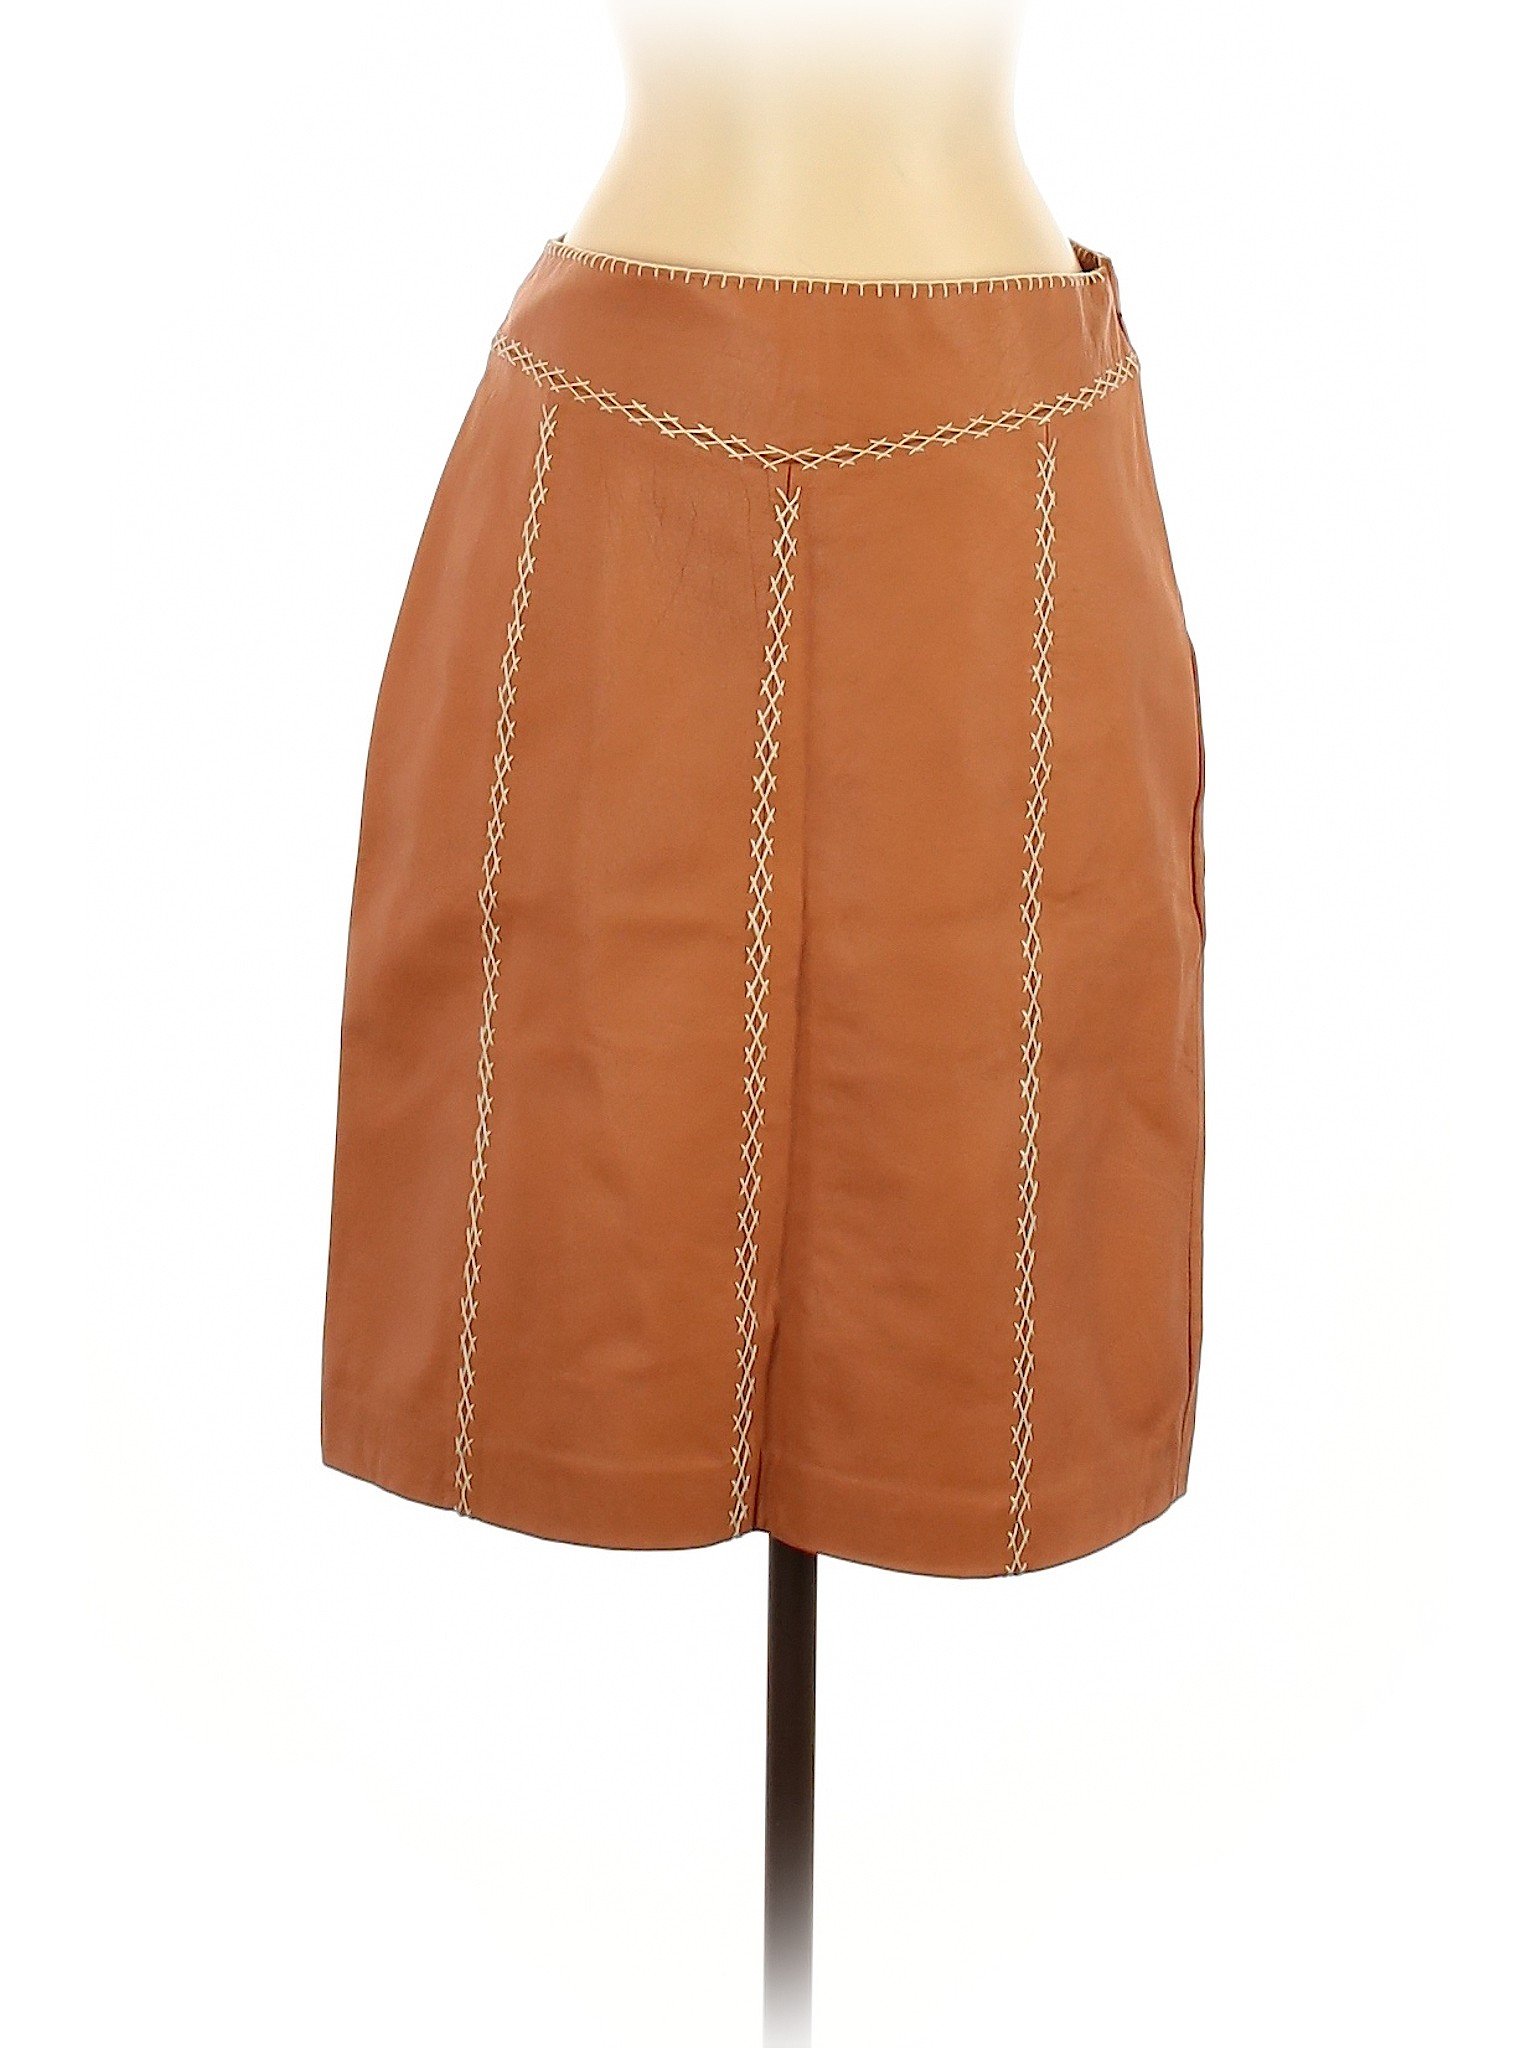 Gap Women Brown Leather Skirt 4 | eBay